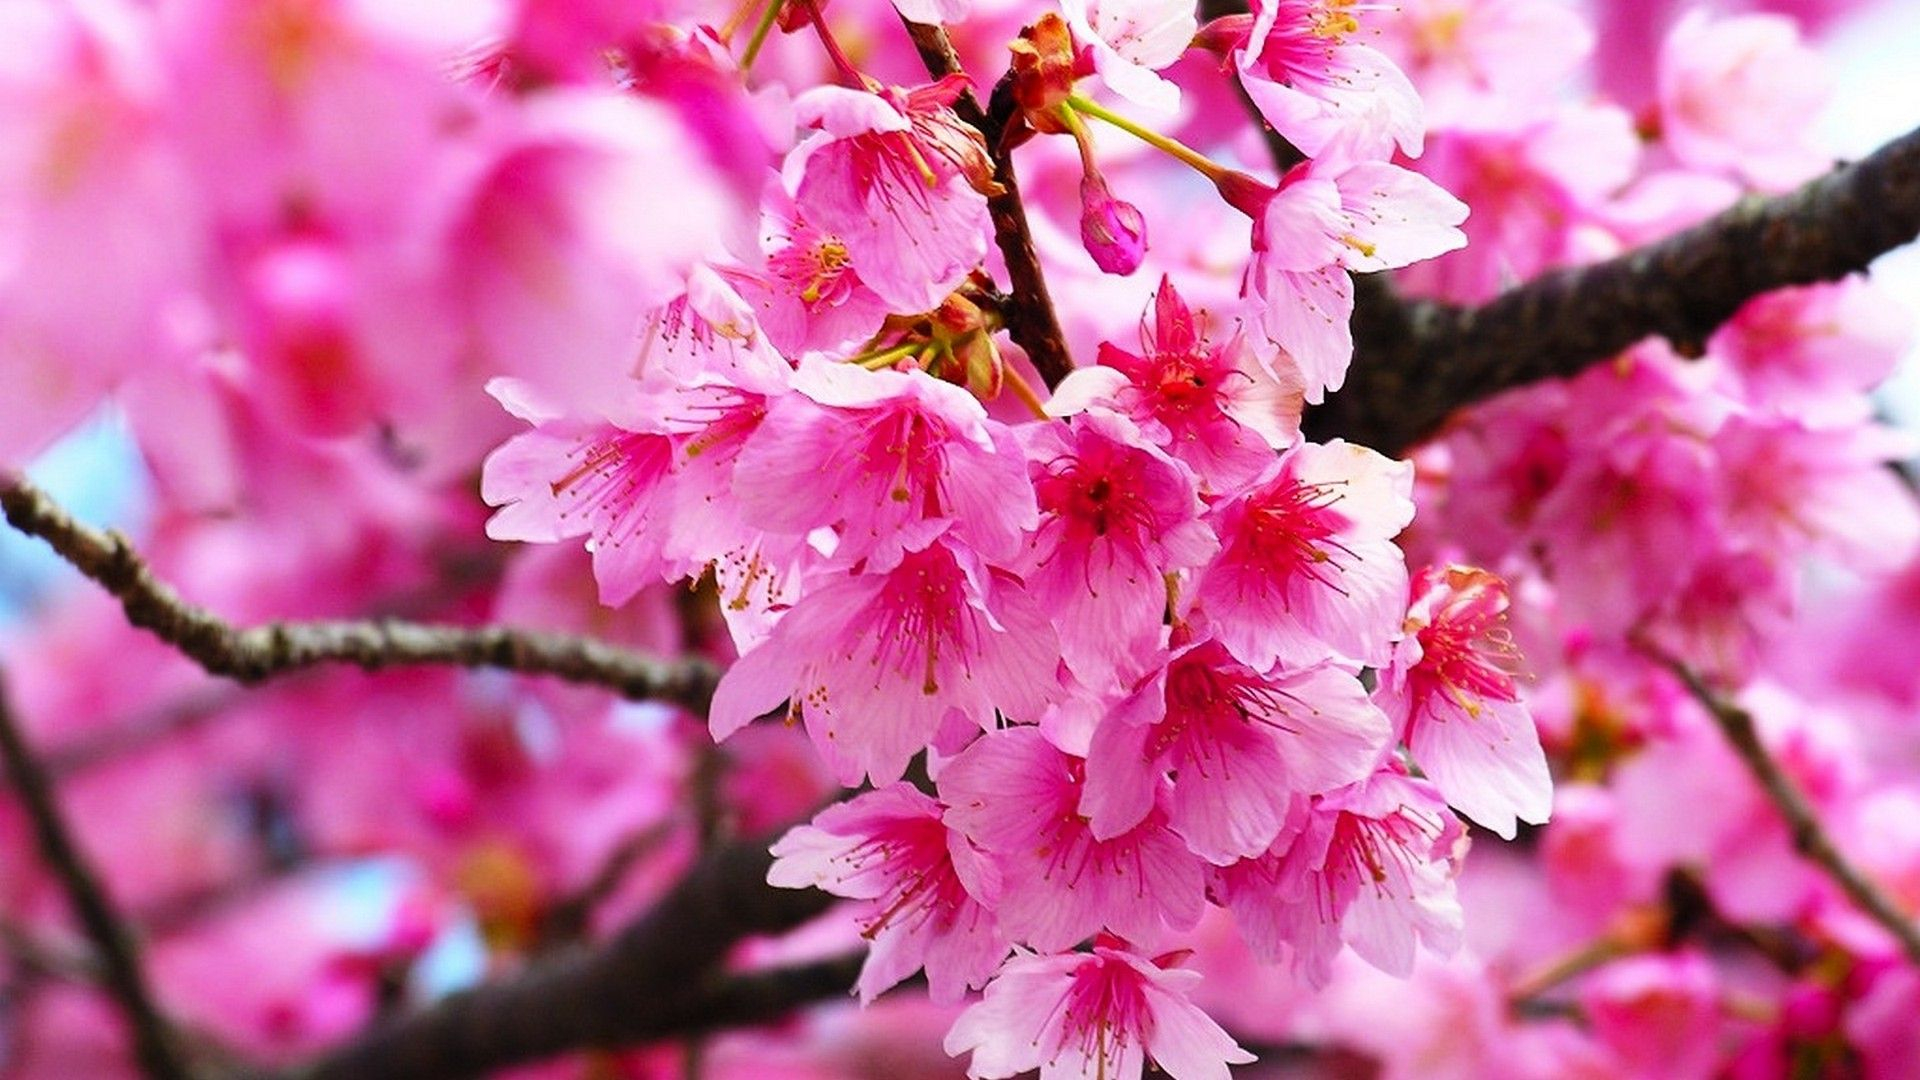 1920x1080 Pink Cherry Blossom Wallpaper HD | Best HD Wallpapers | Beautiful flowers wallpapers, Cherry blossom images, Cherry blossom wallpaper